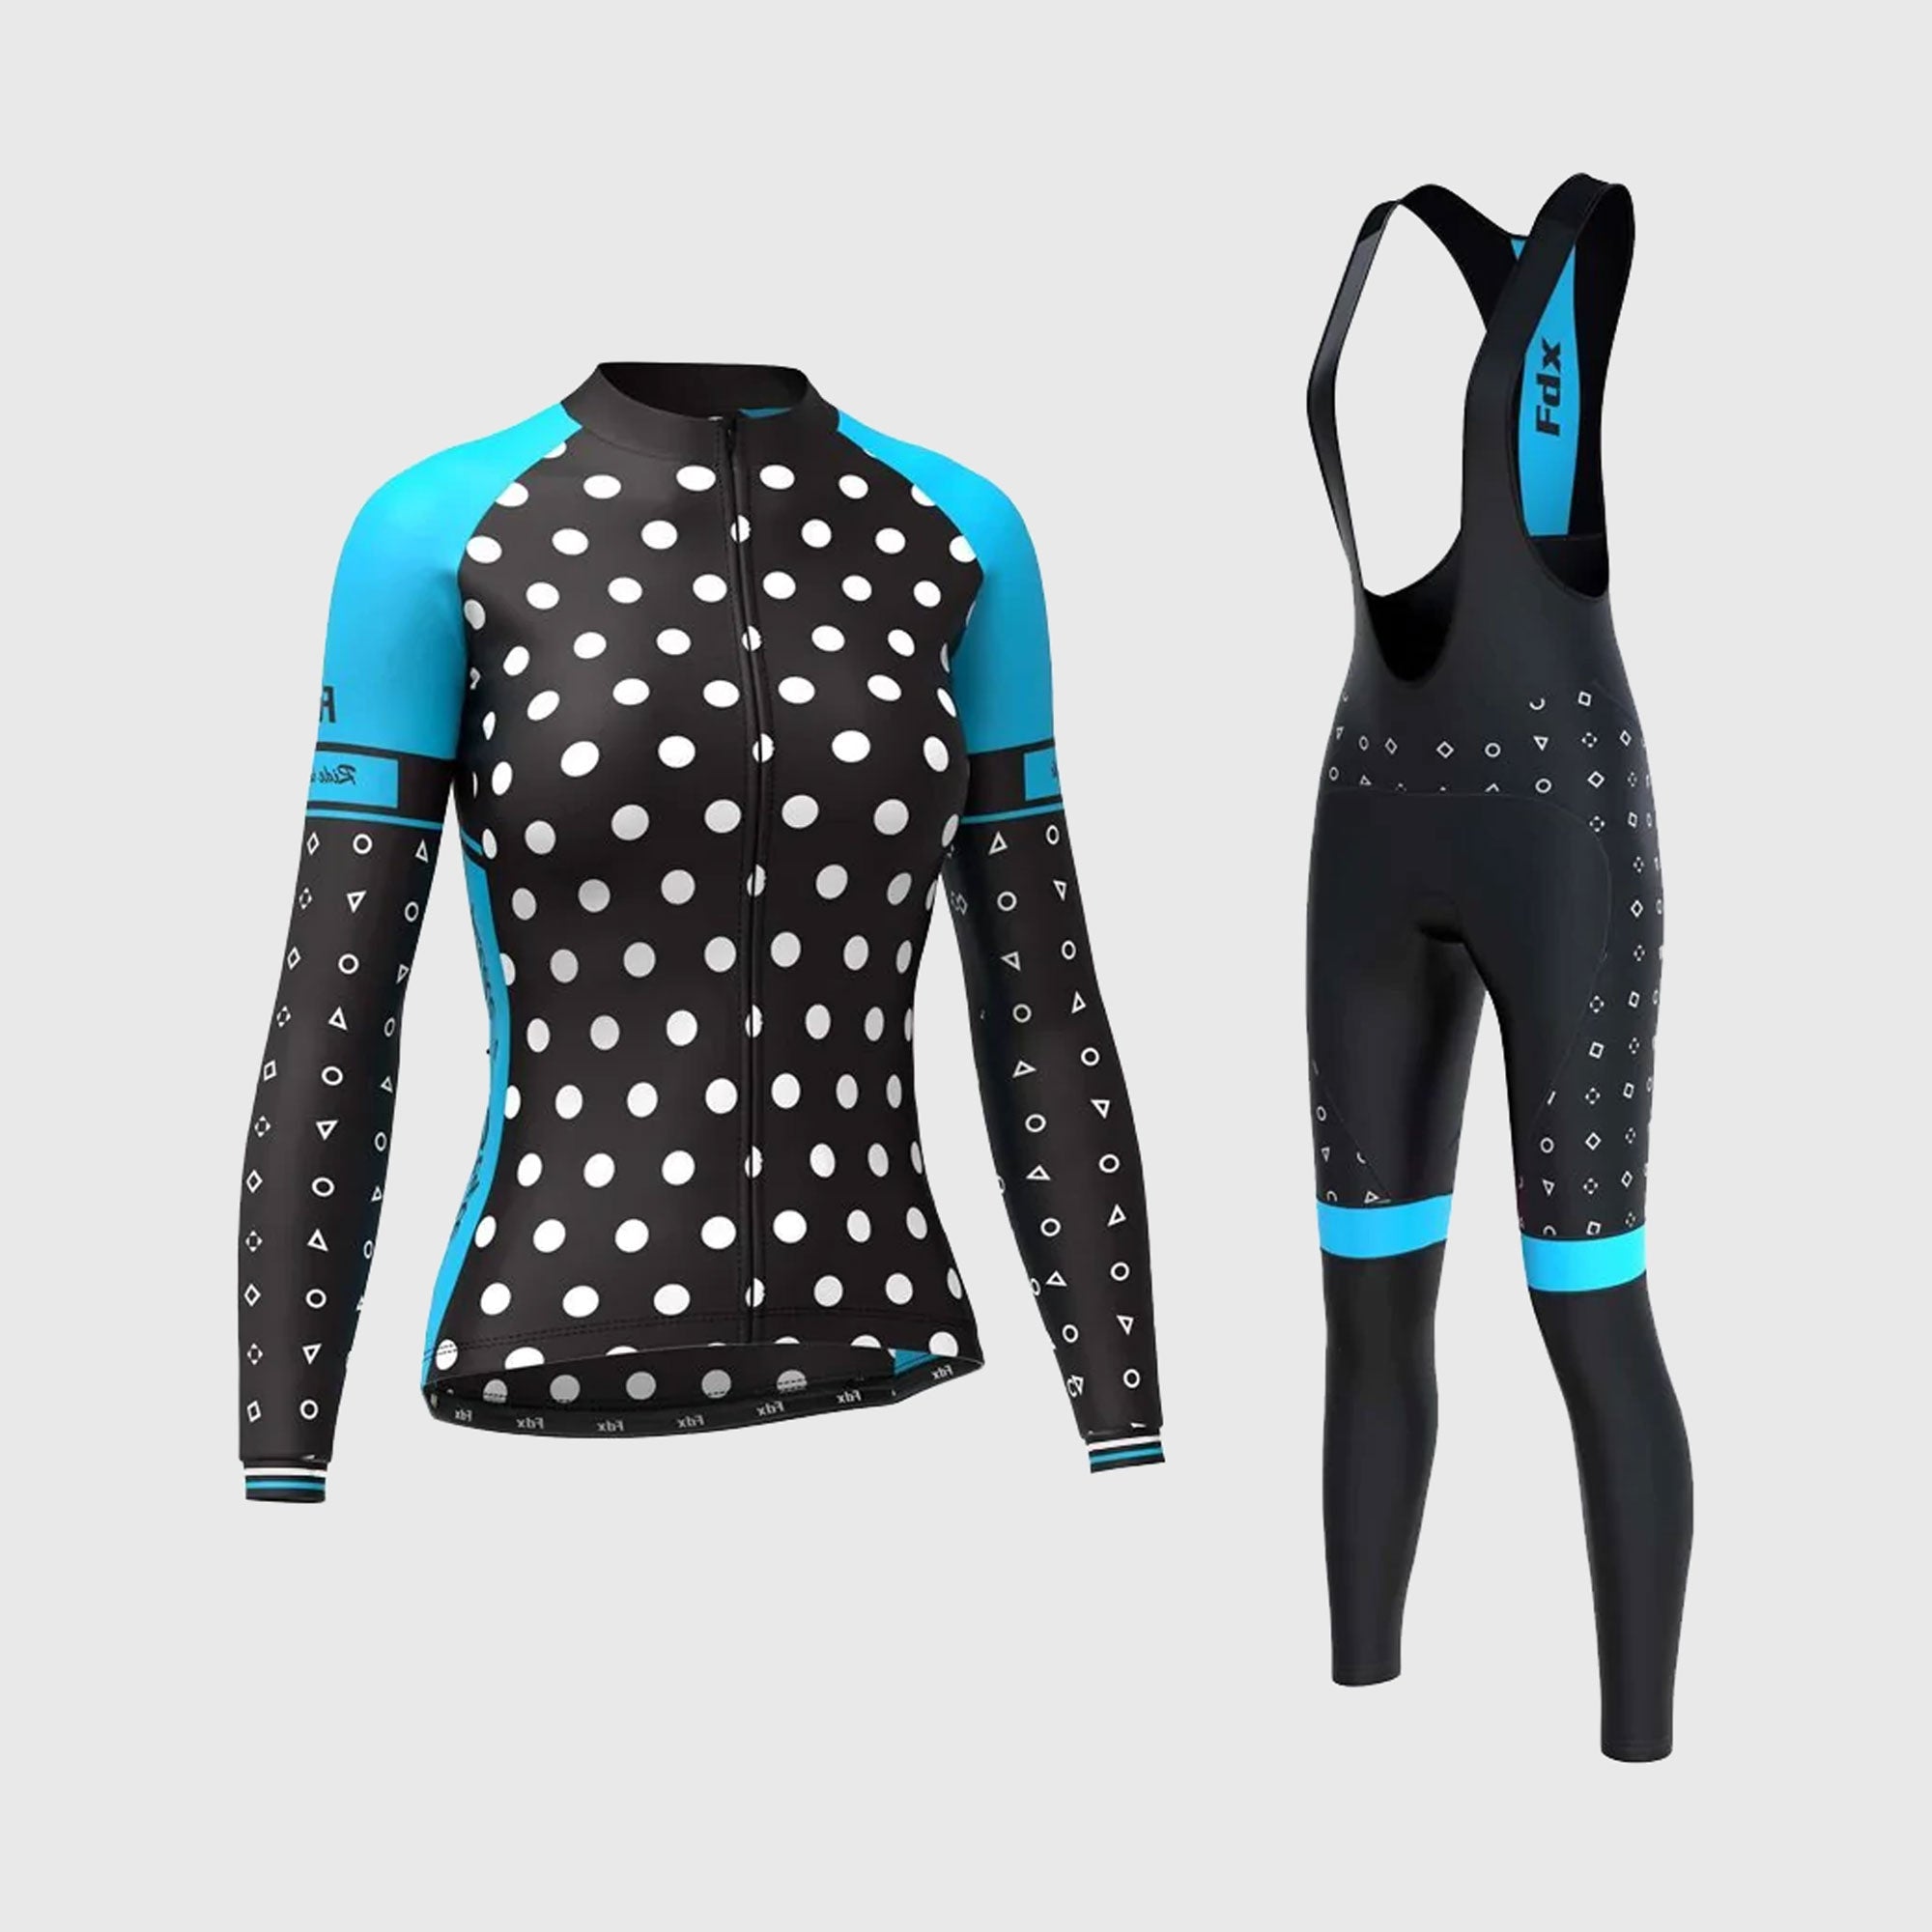 Fdx Women's Set Polka Dots Thermal Long Sleeve Cycling Jersey & Bib Tights - Blue